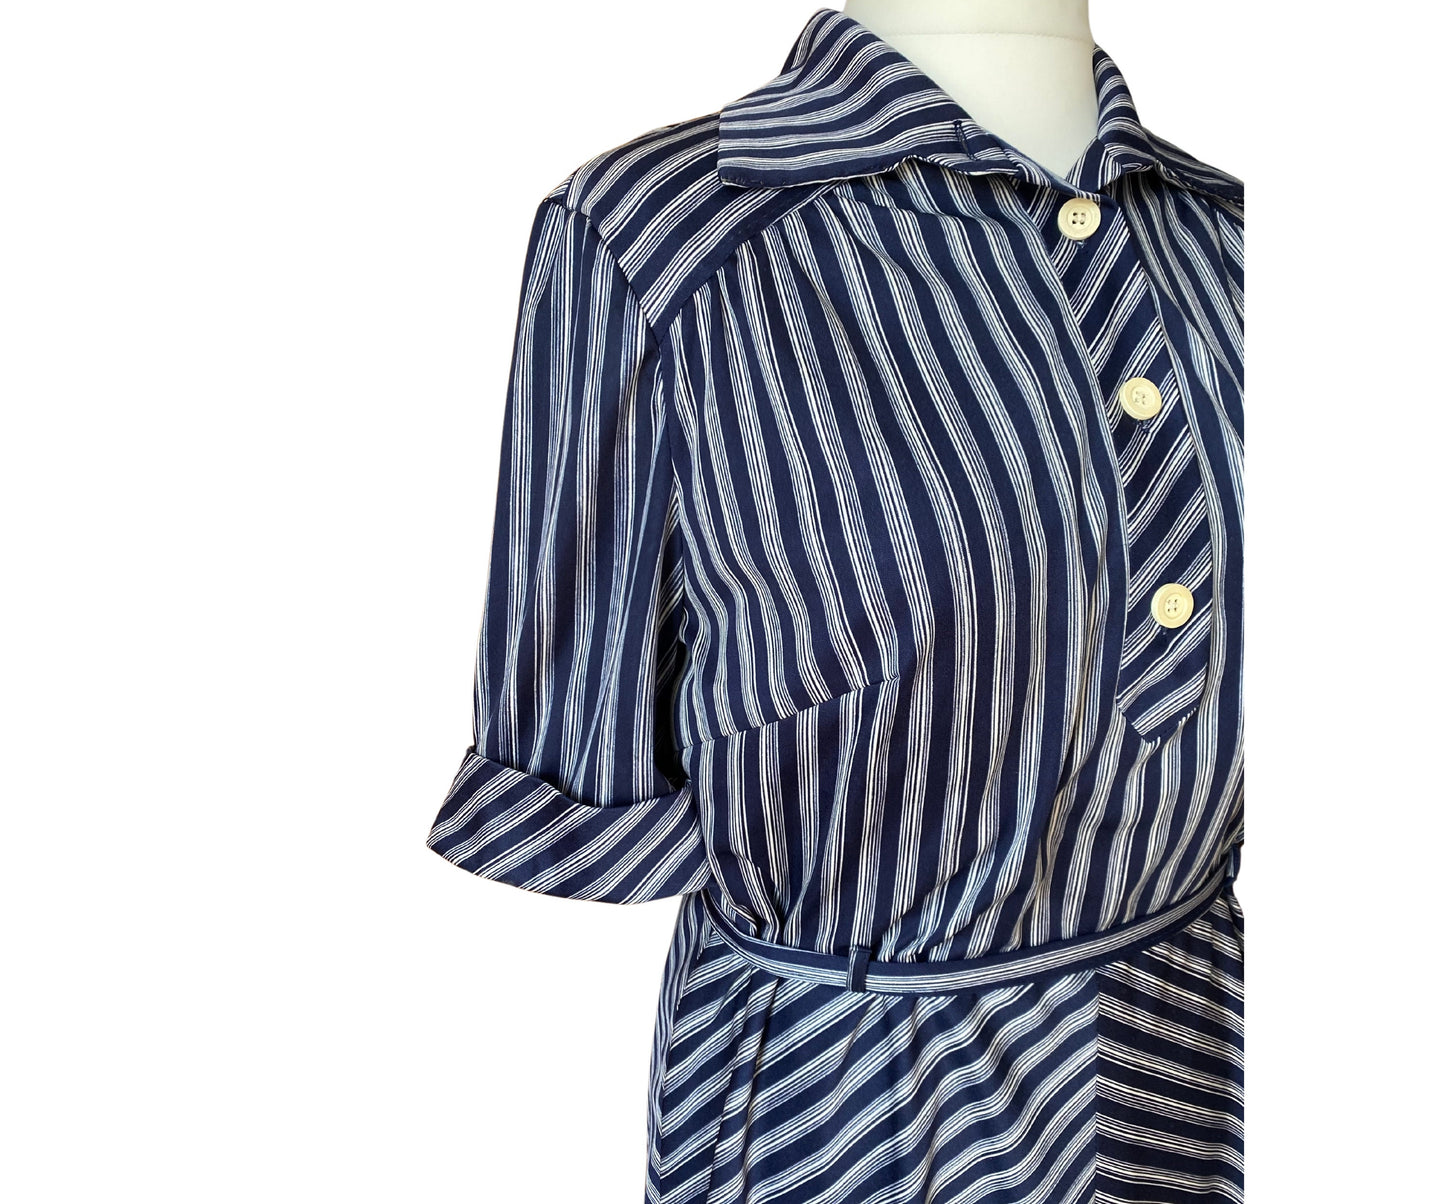 70s blue and white striped midi dress. Approx  U.K size 18-20